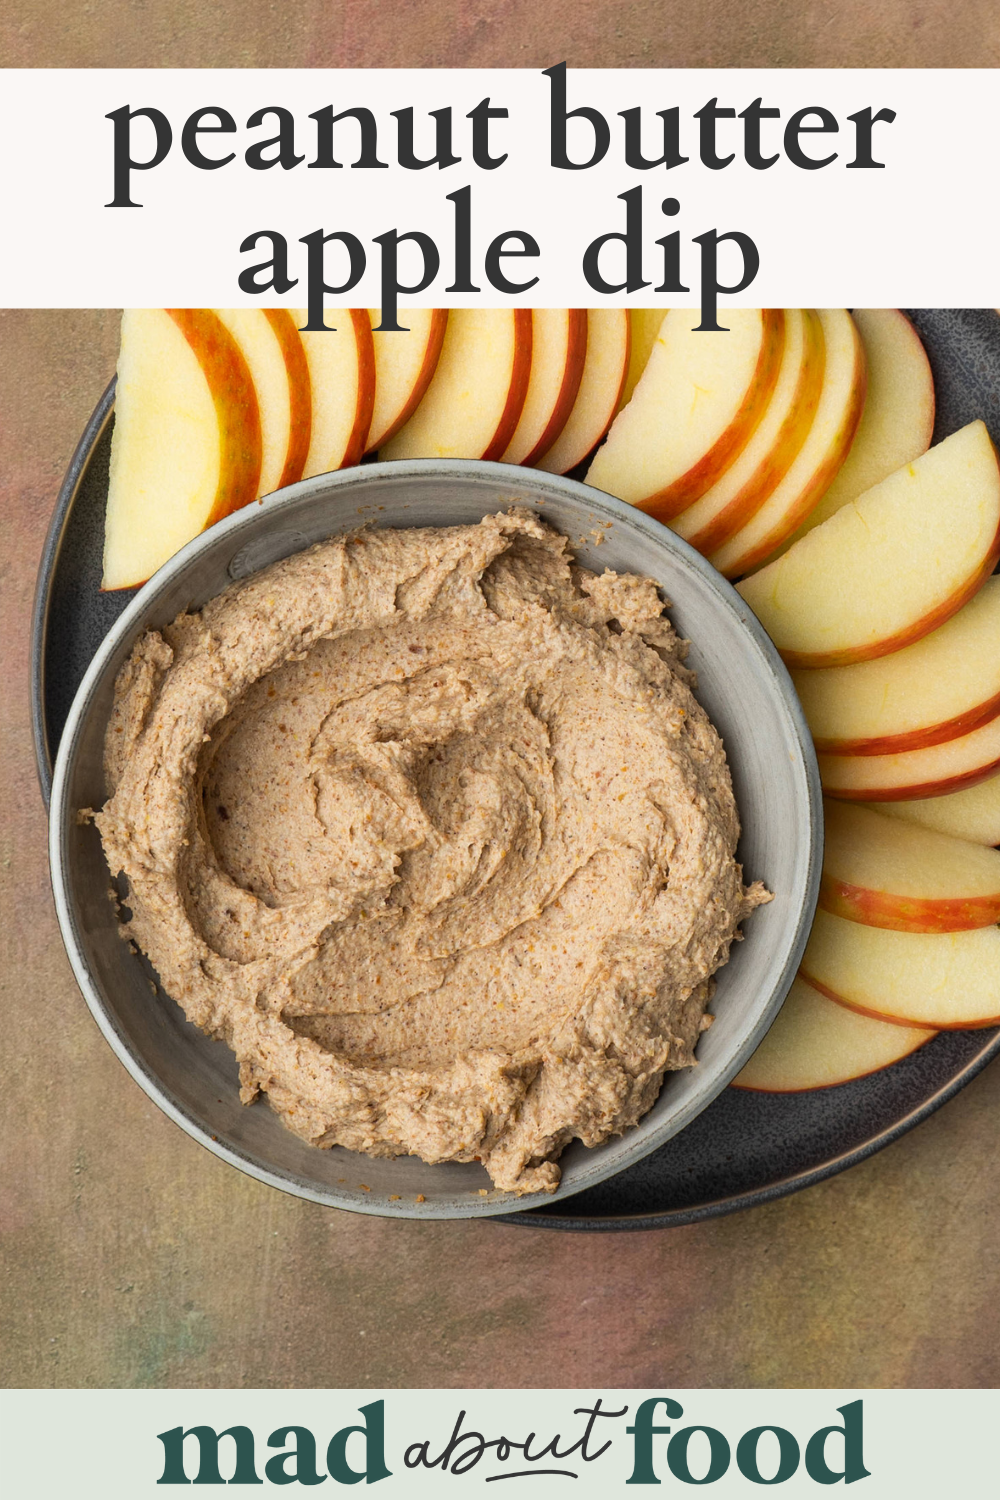 Image for pinning Peanut Butter Apple Dip recipe on Pinterst